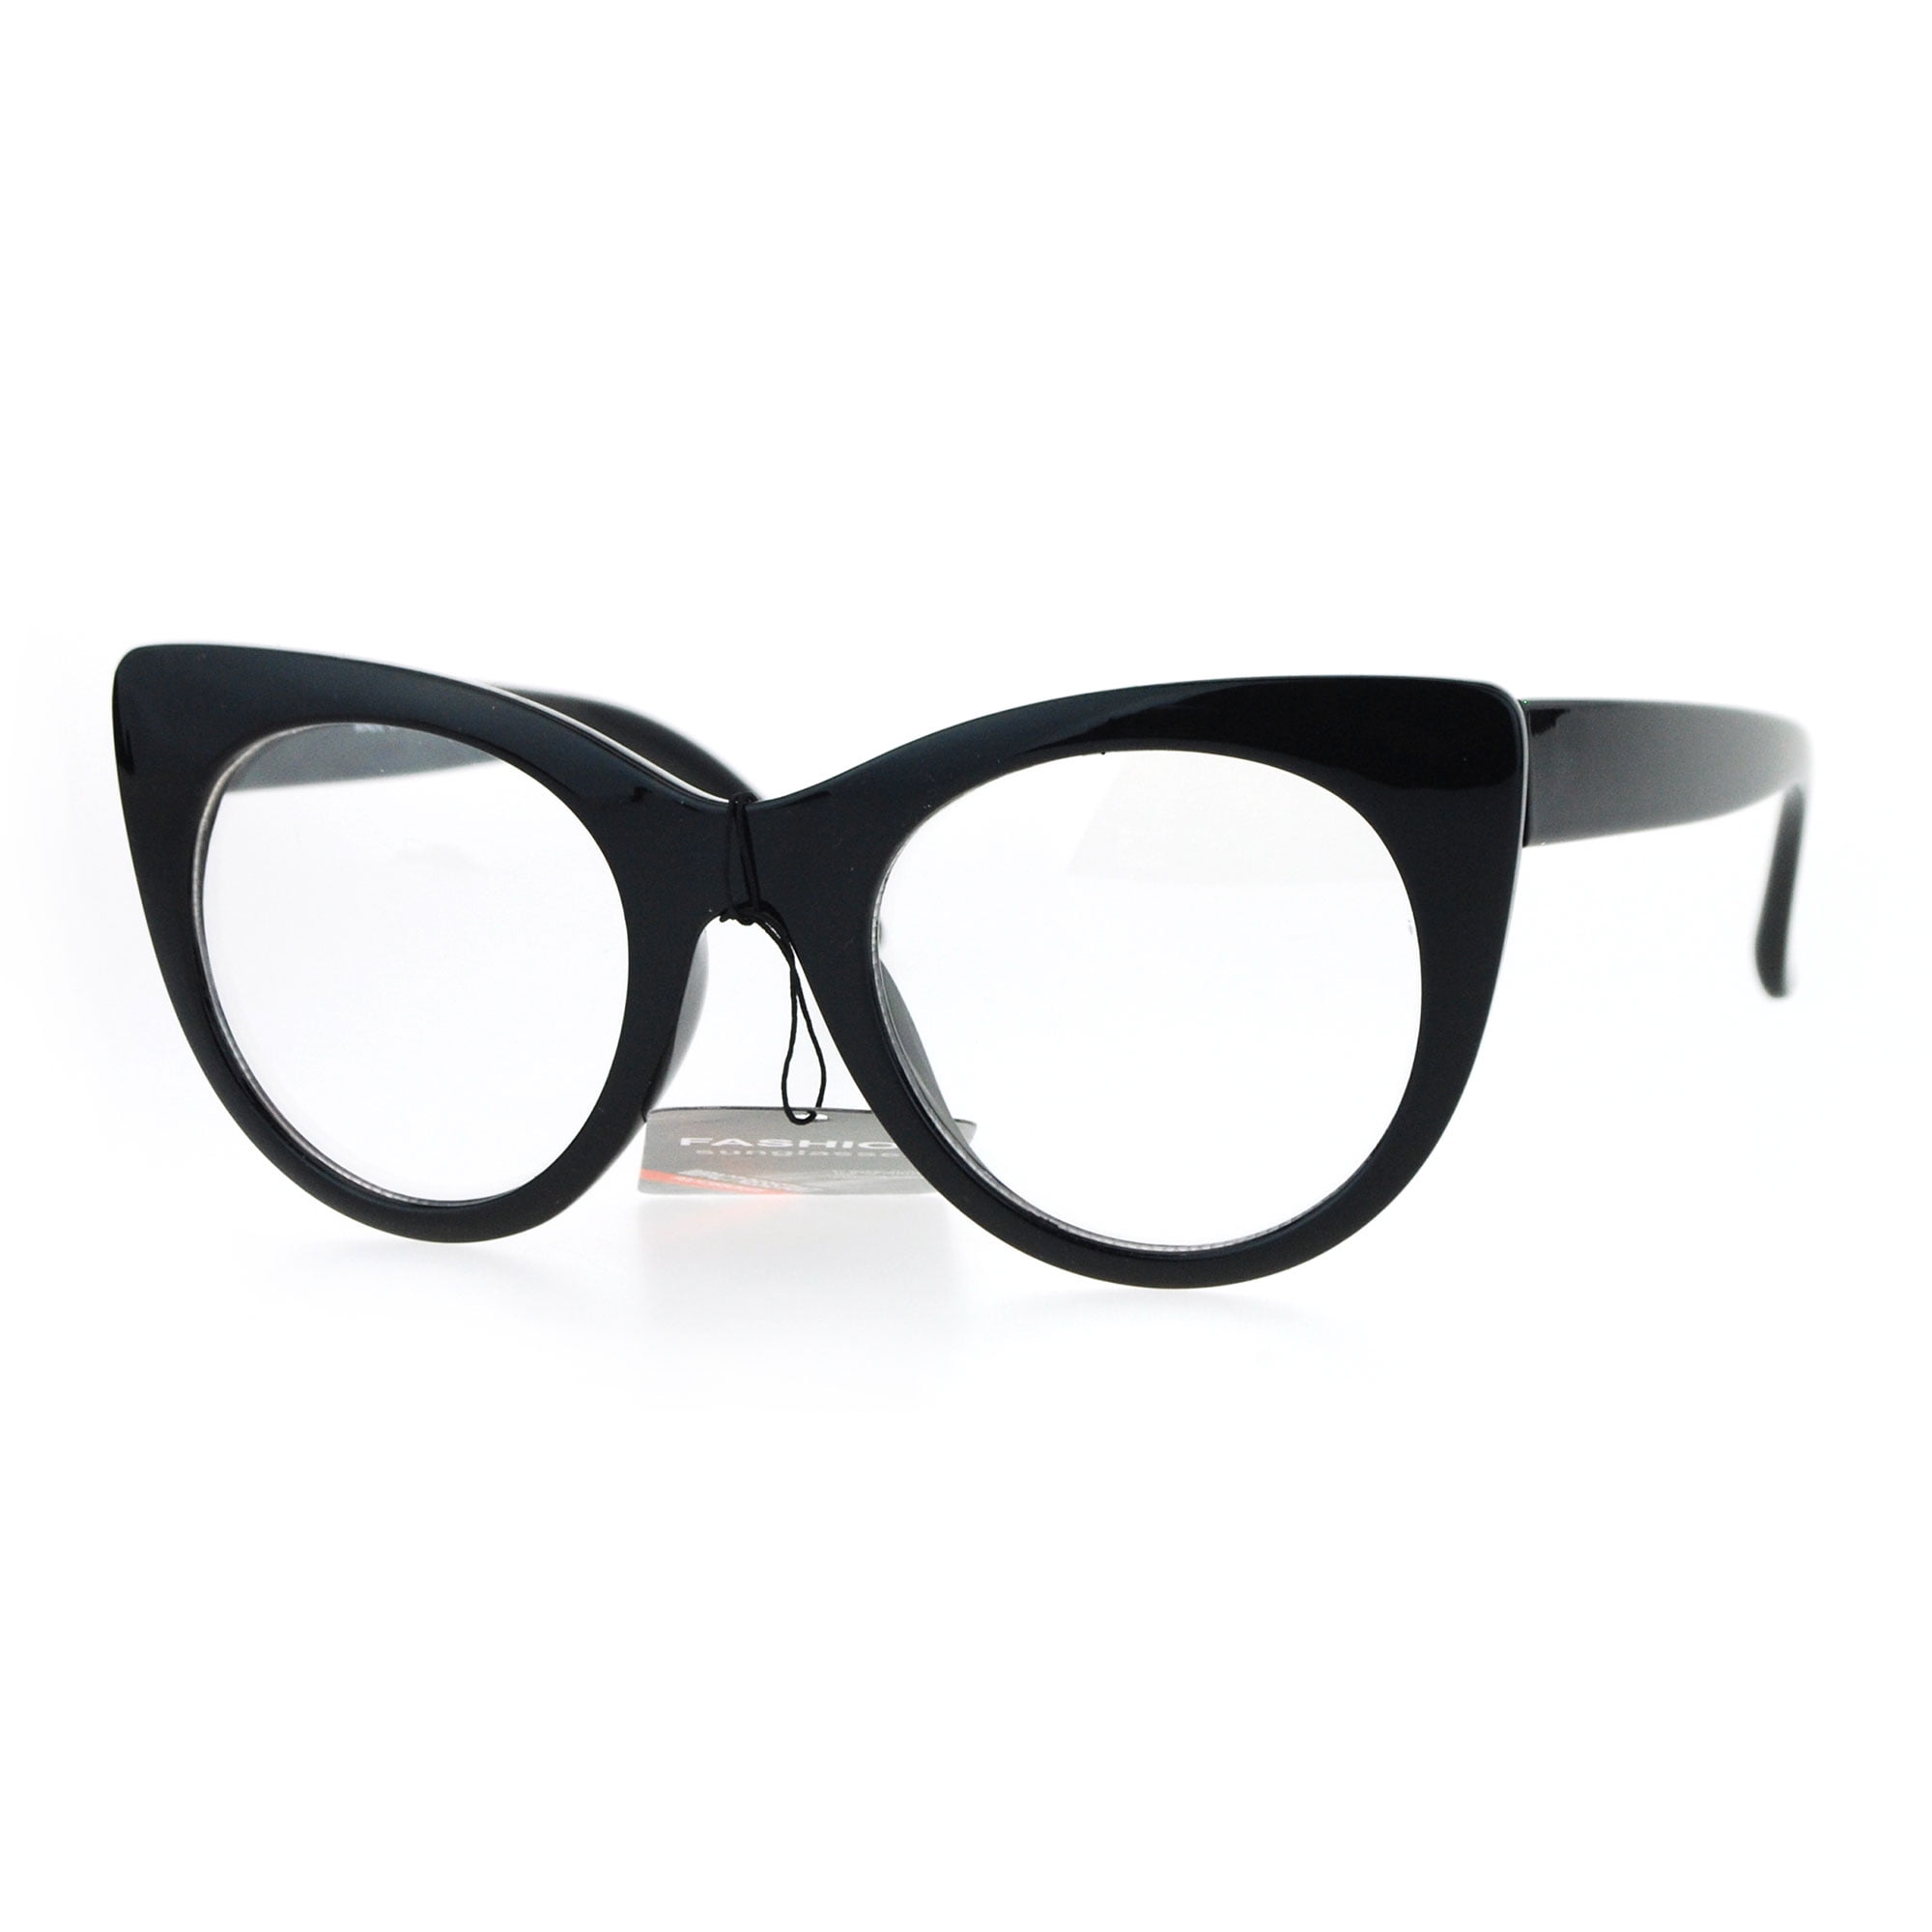 CAT EYE Transparent Frame Horn Rim Clear Lens Glasses Retro Vintage Style New 